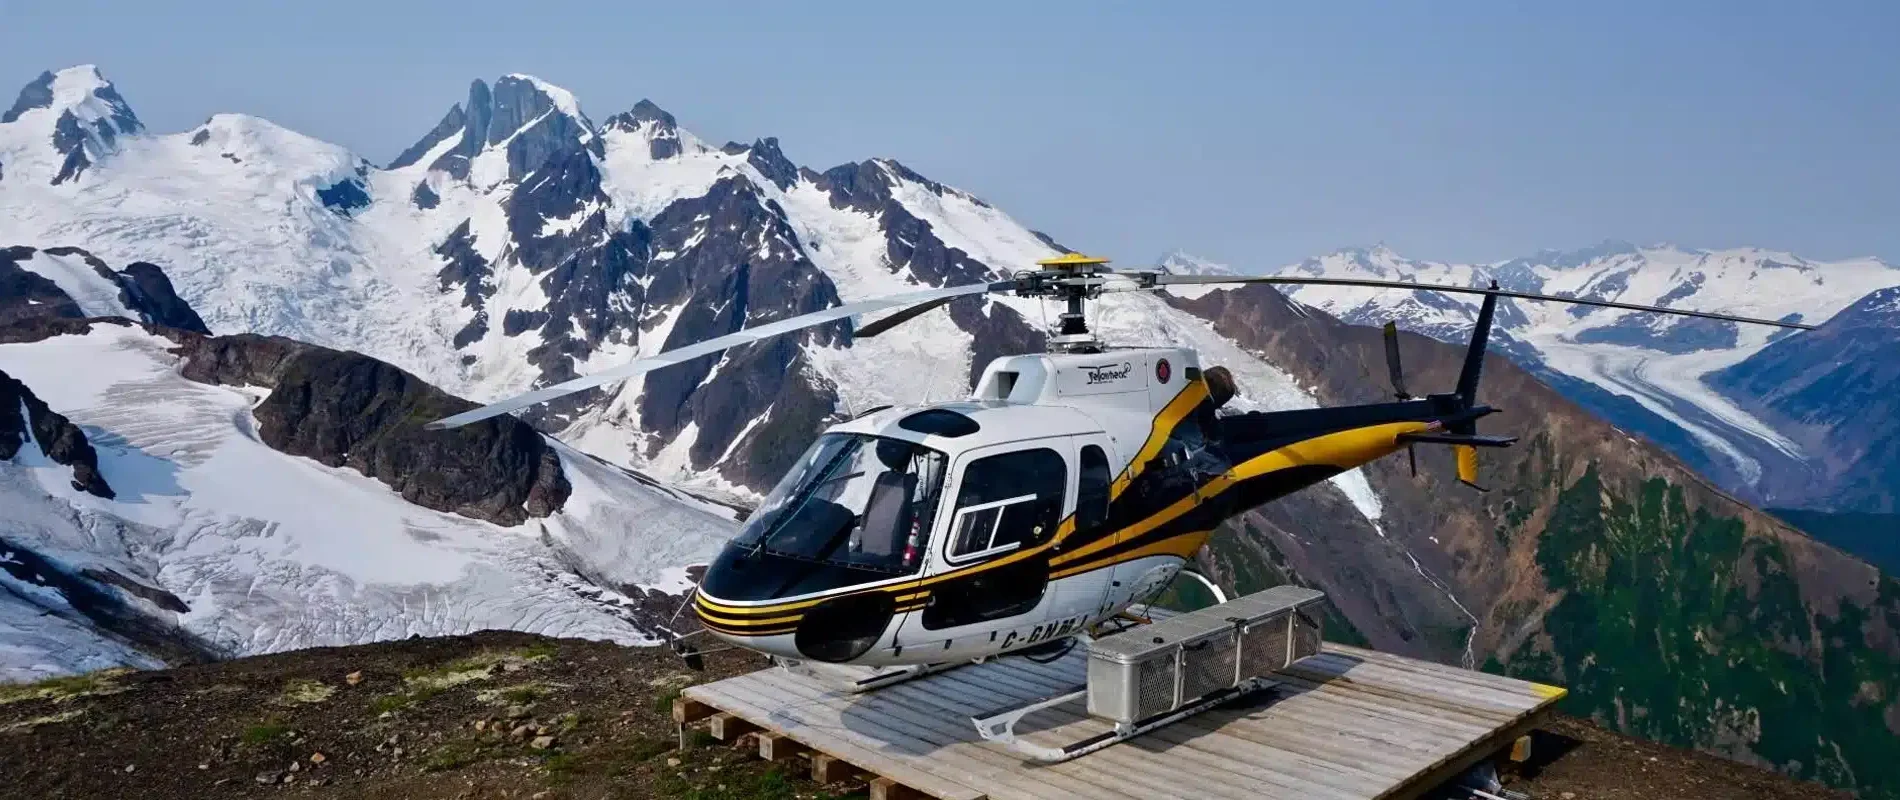 Yellowhead Helicopters mountaintop landing